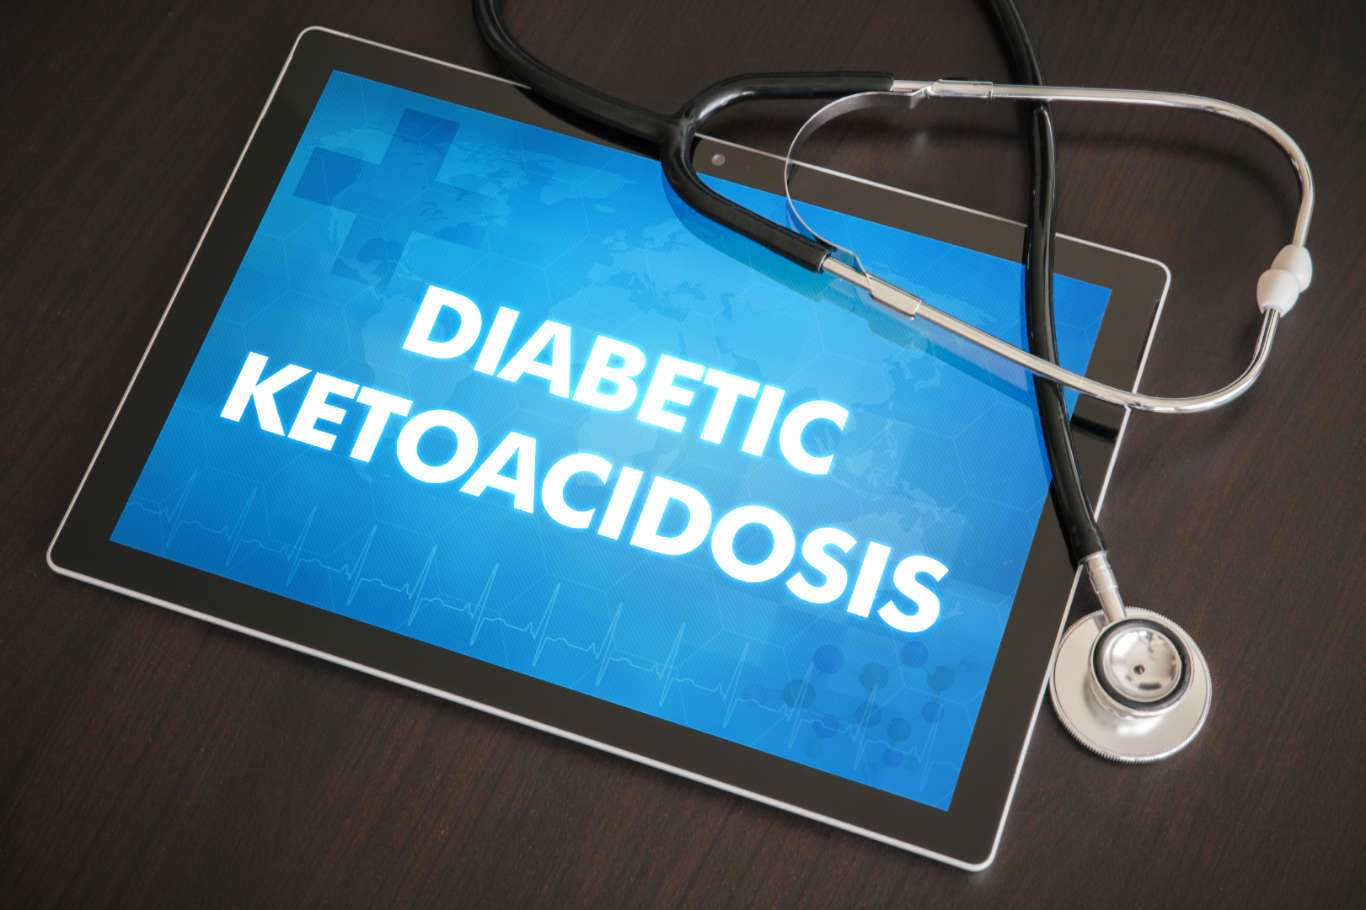 Diabetic Ketoacidosis - Importance of Ketone testing for Diabetes patients